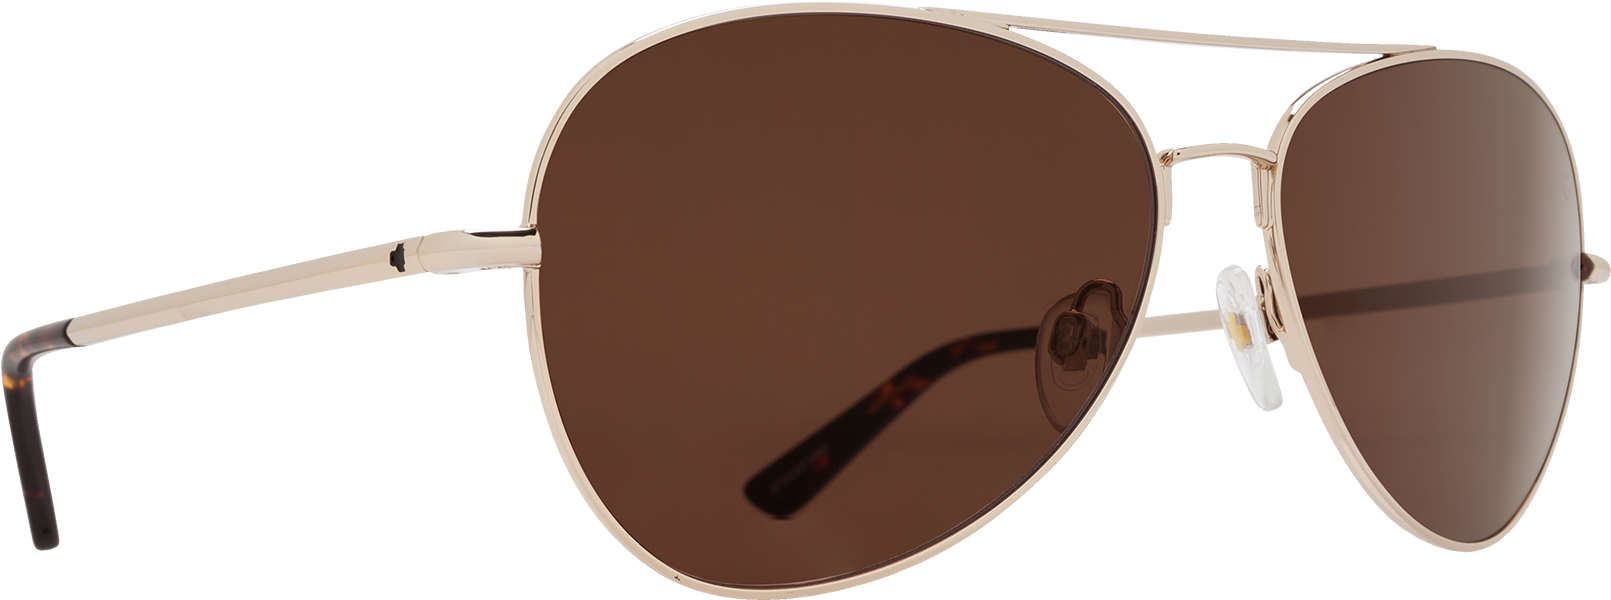 Classic Aviator Sunglasses Brown Lens